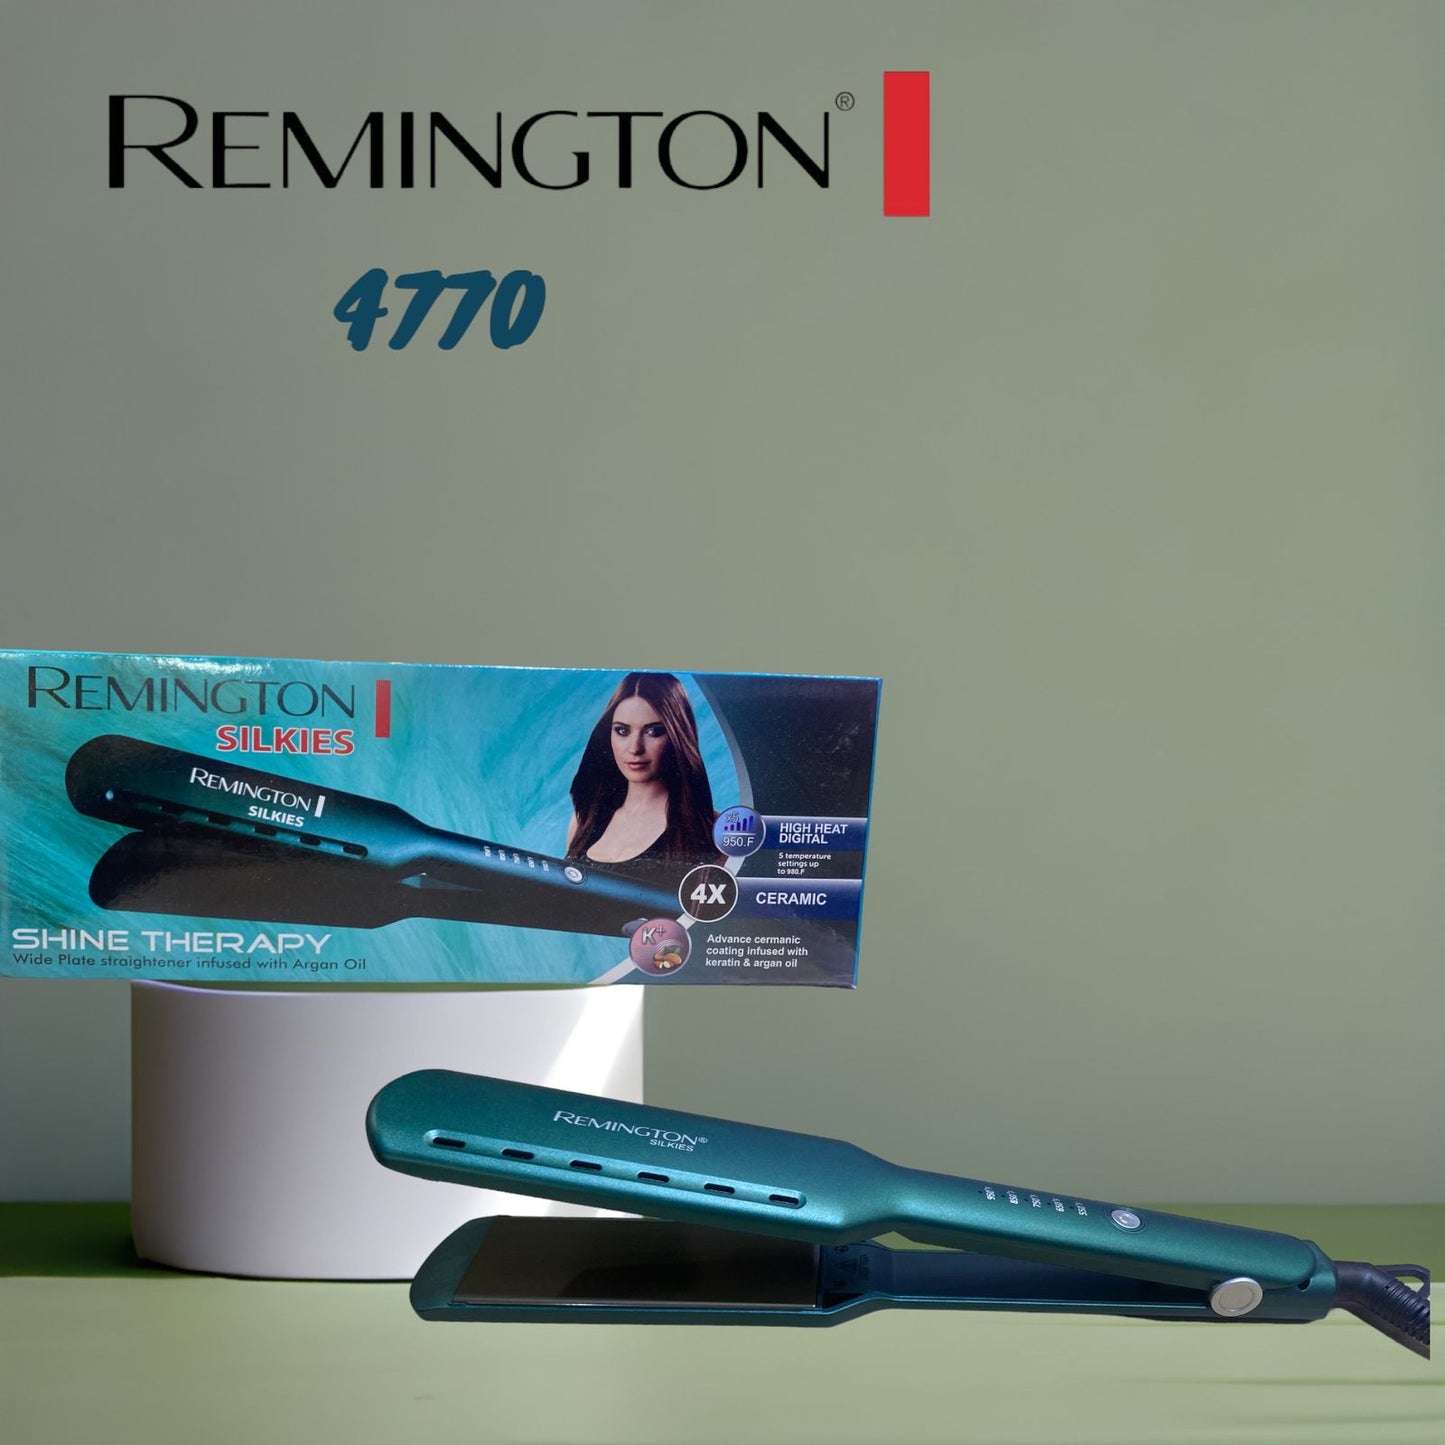 Remington Straightener Model # 4770